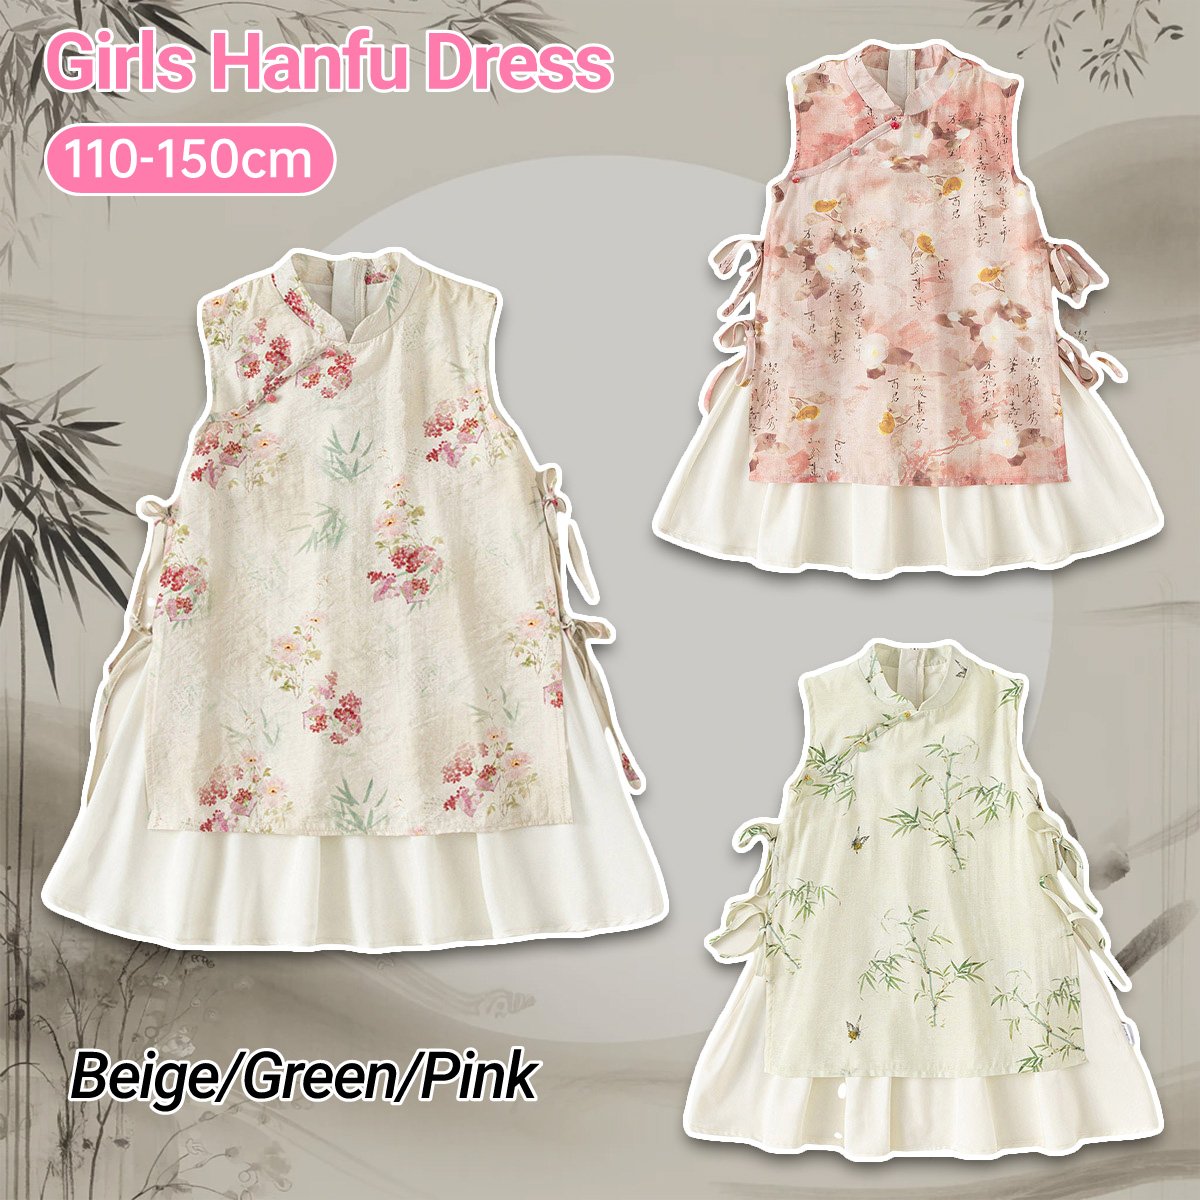 Beige Green Pink Floral Girls Hanfu Dress